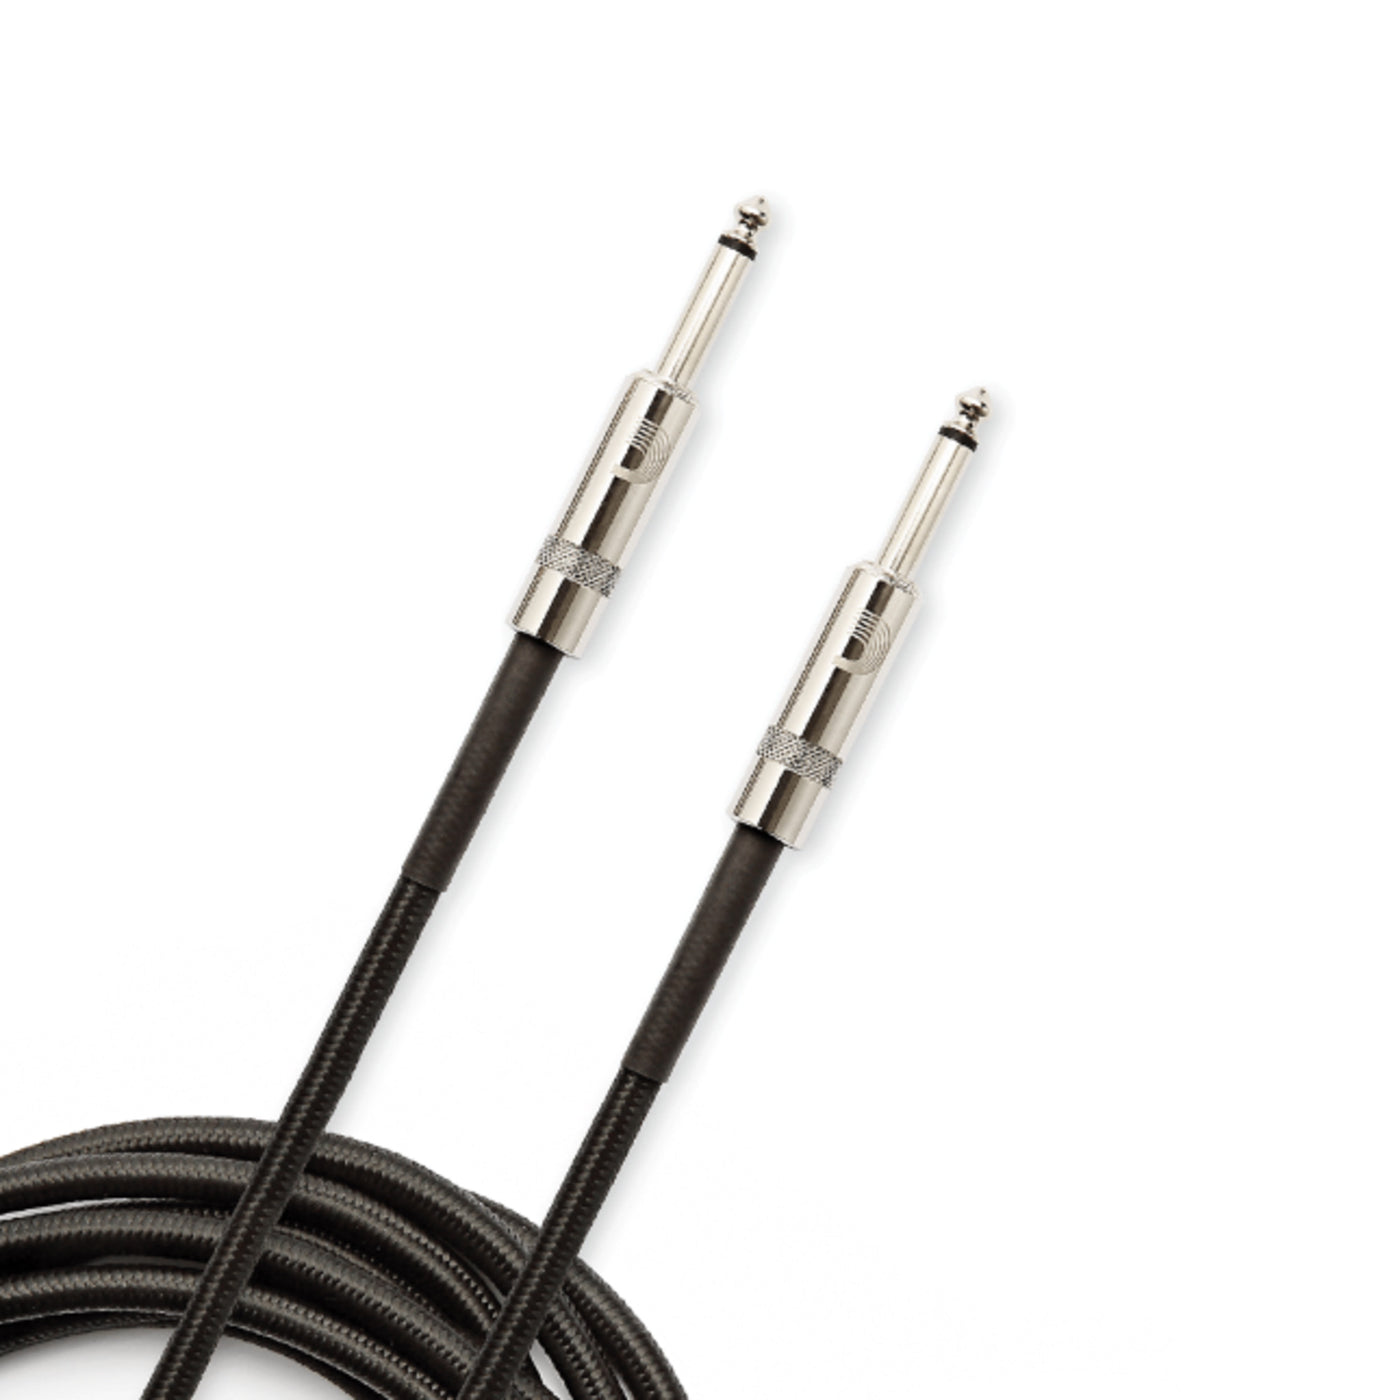 D'Addario Custom Series Braided Instrument Cable, Black, 20' (PW-BG-20BK)